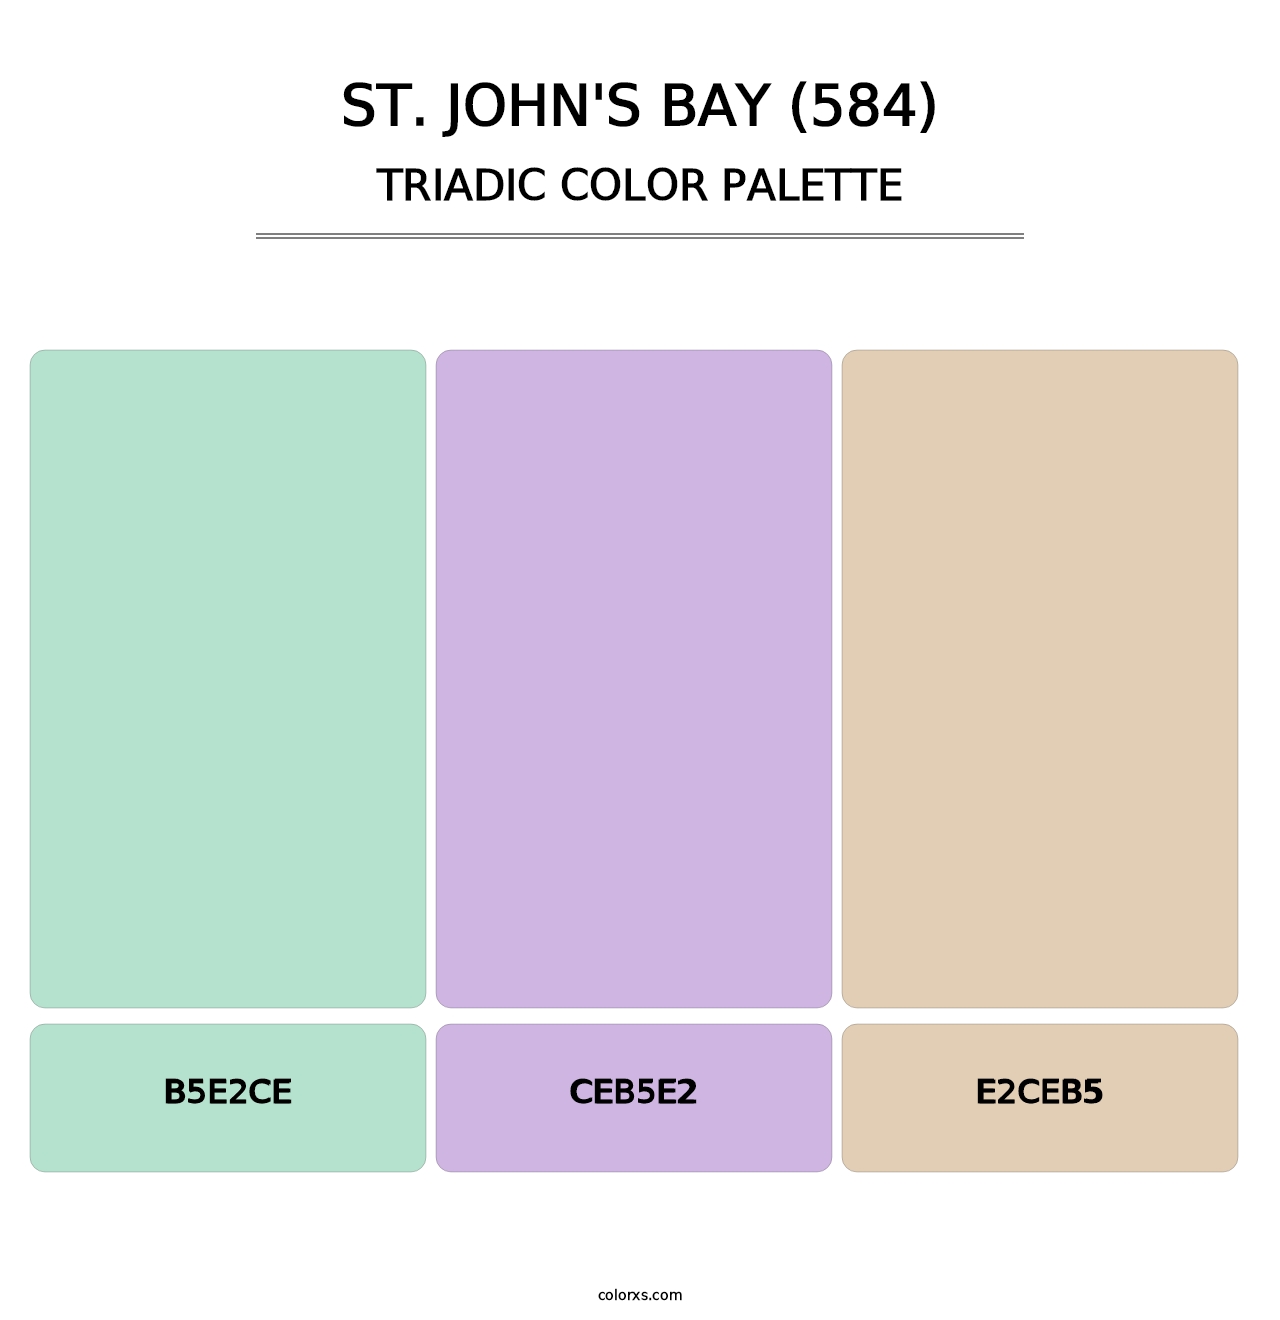 St. John's Bay (584) - Triadic Color Palette